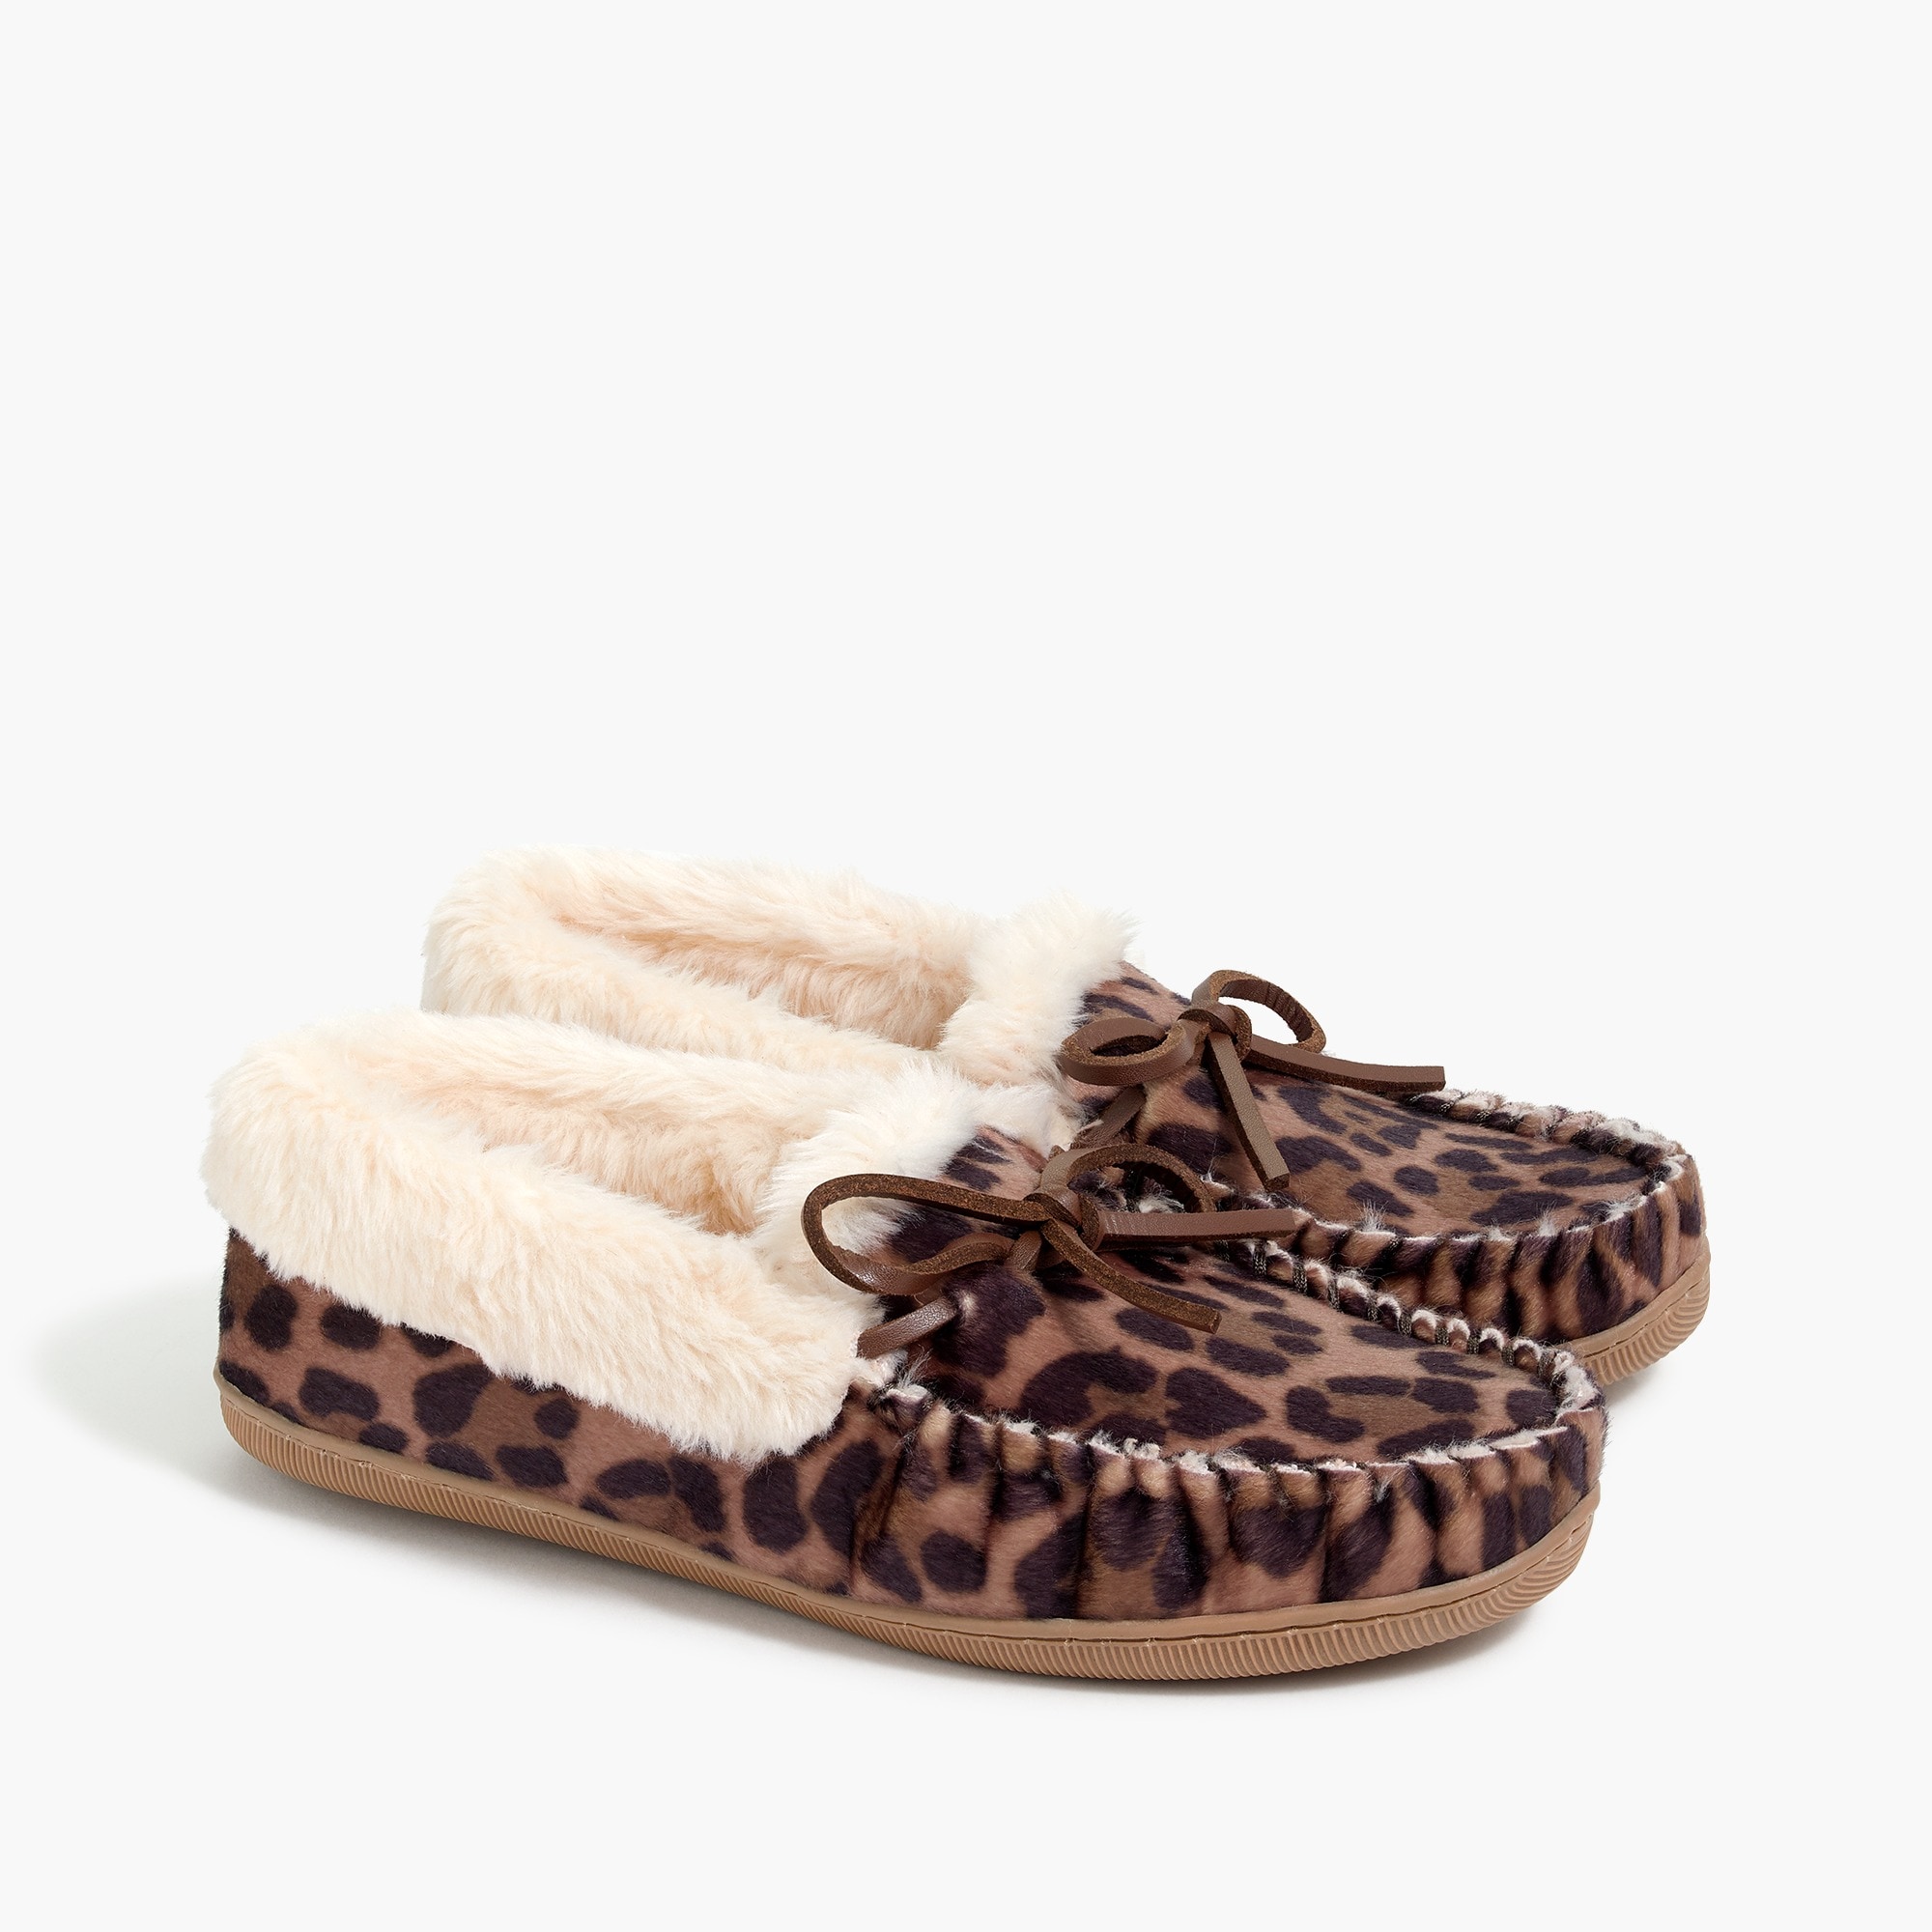 leopard bedroom slippers